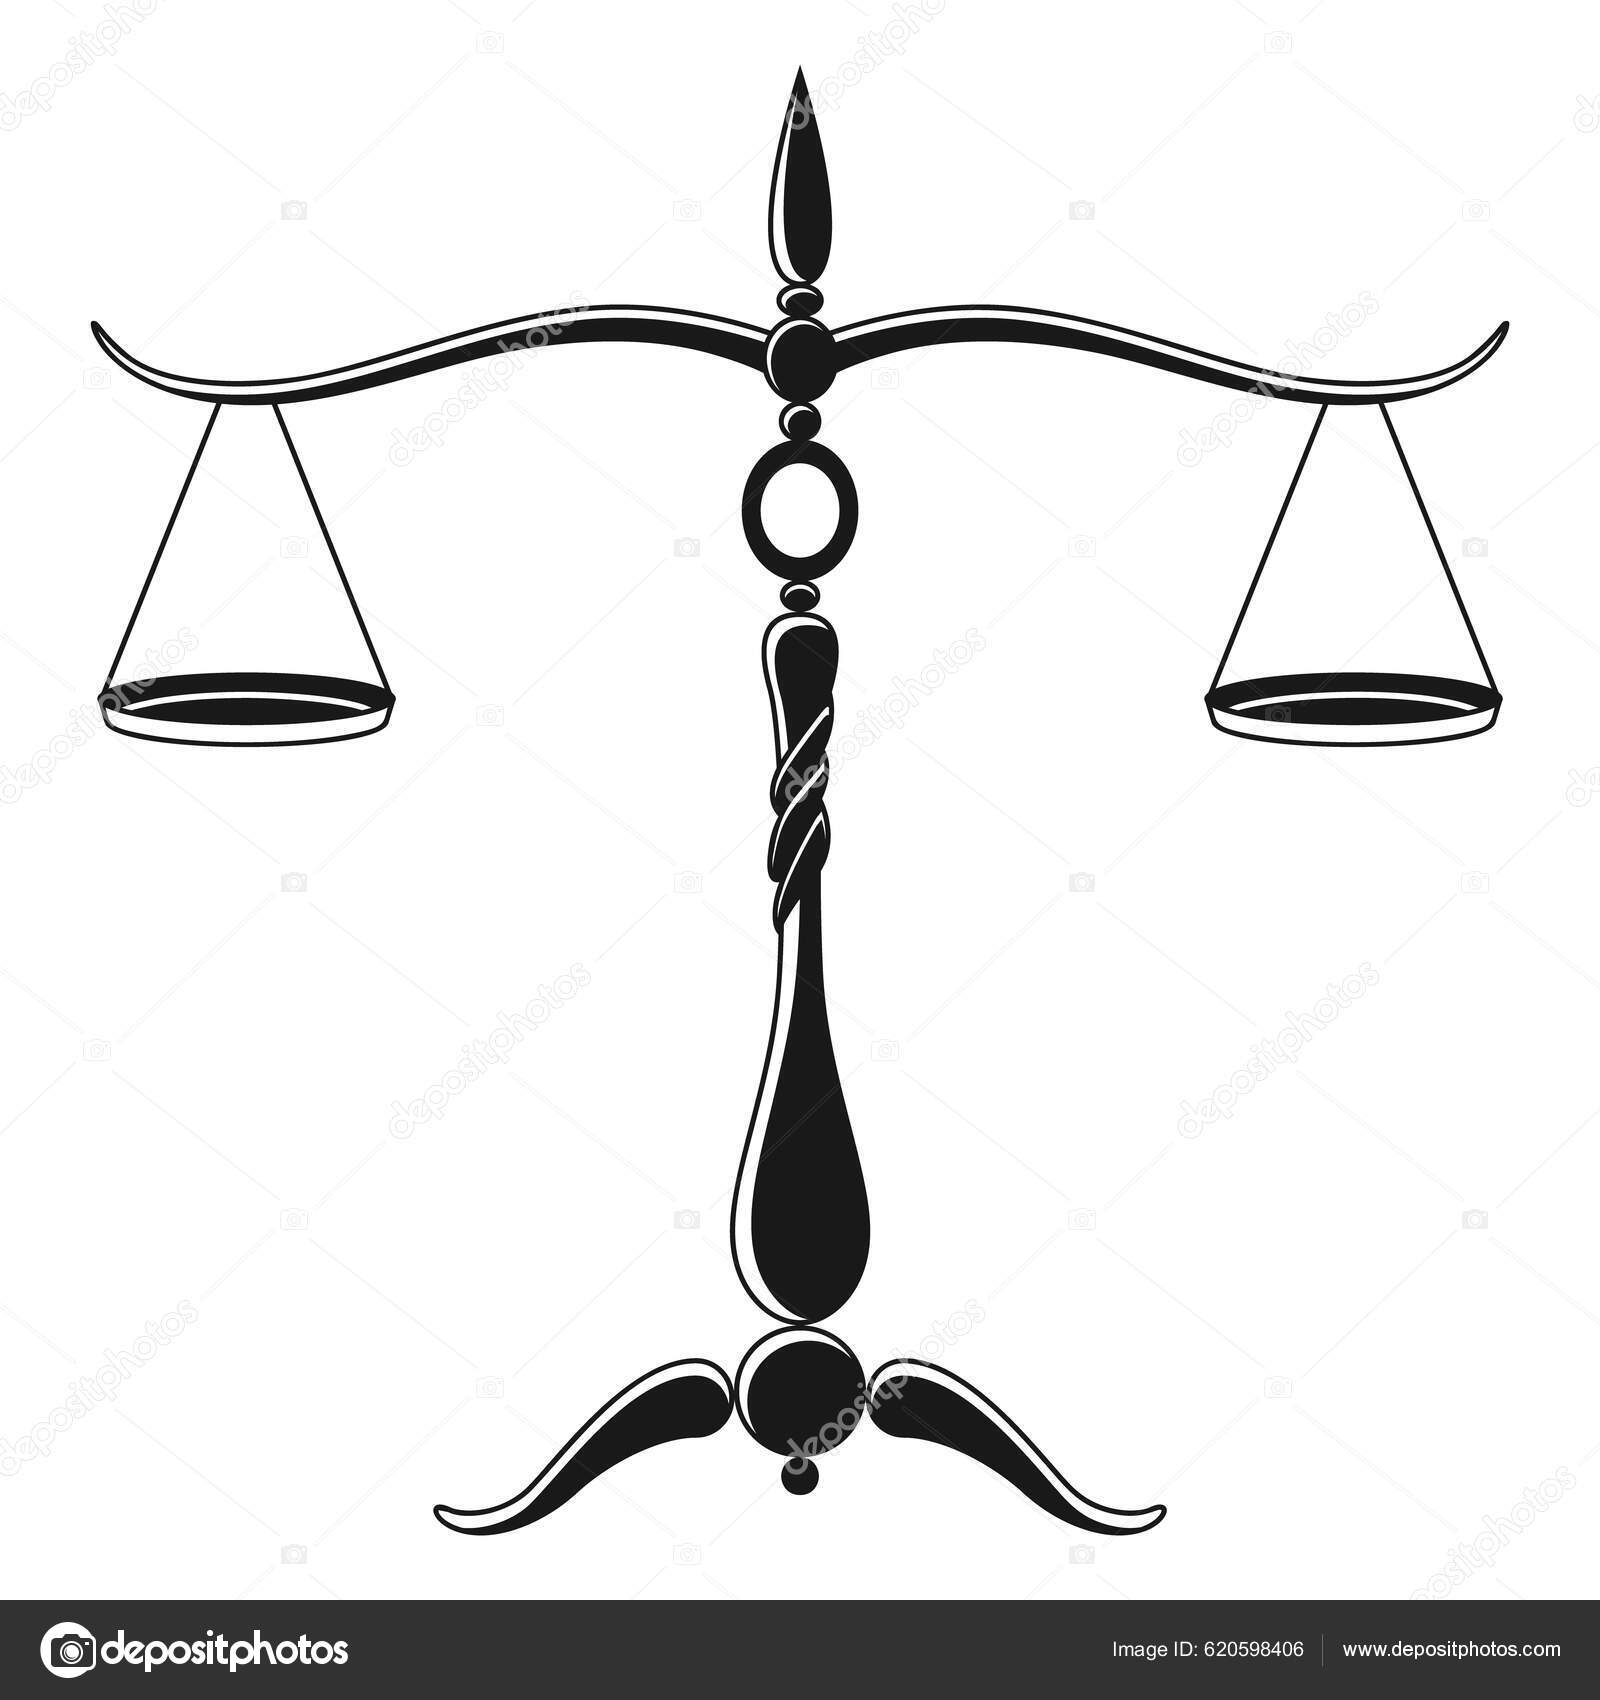 https://st5.depositphotos.com/1004996/62059/v/1600/depositphotos_620598406-stock-illustration-justice-scales-silhouette-mechanical-balancing.jpg